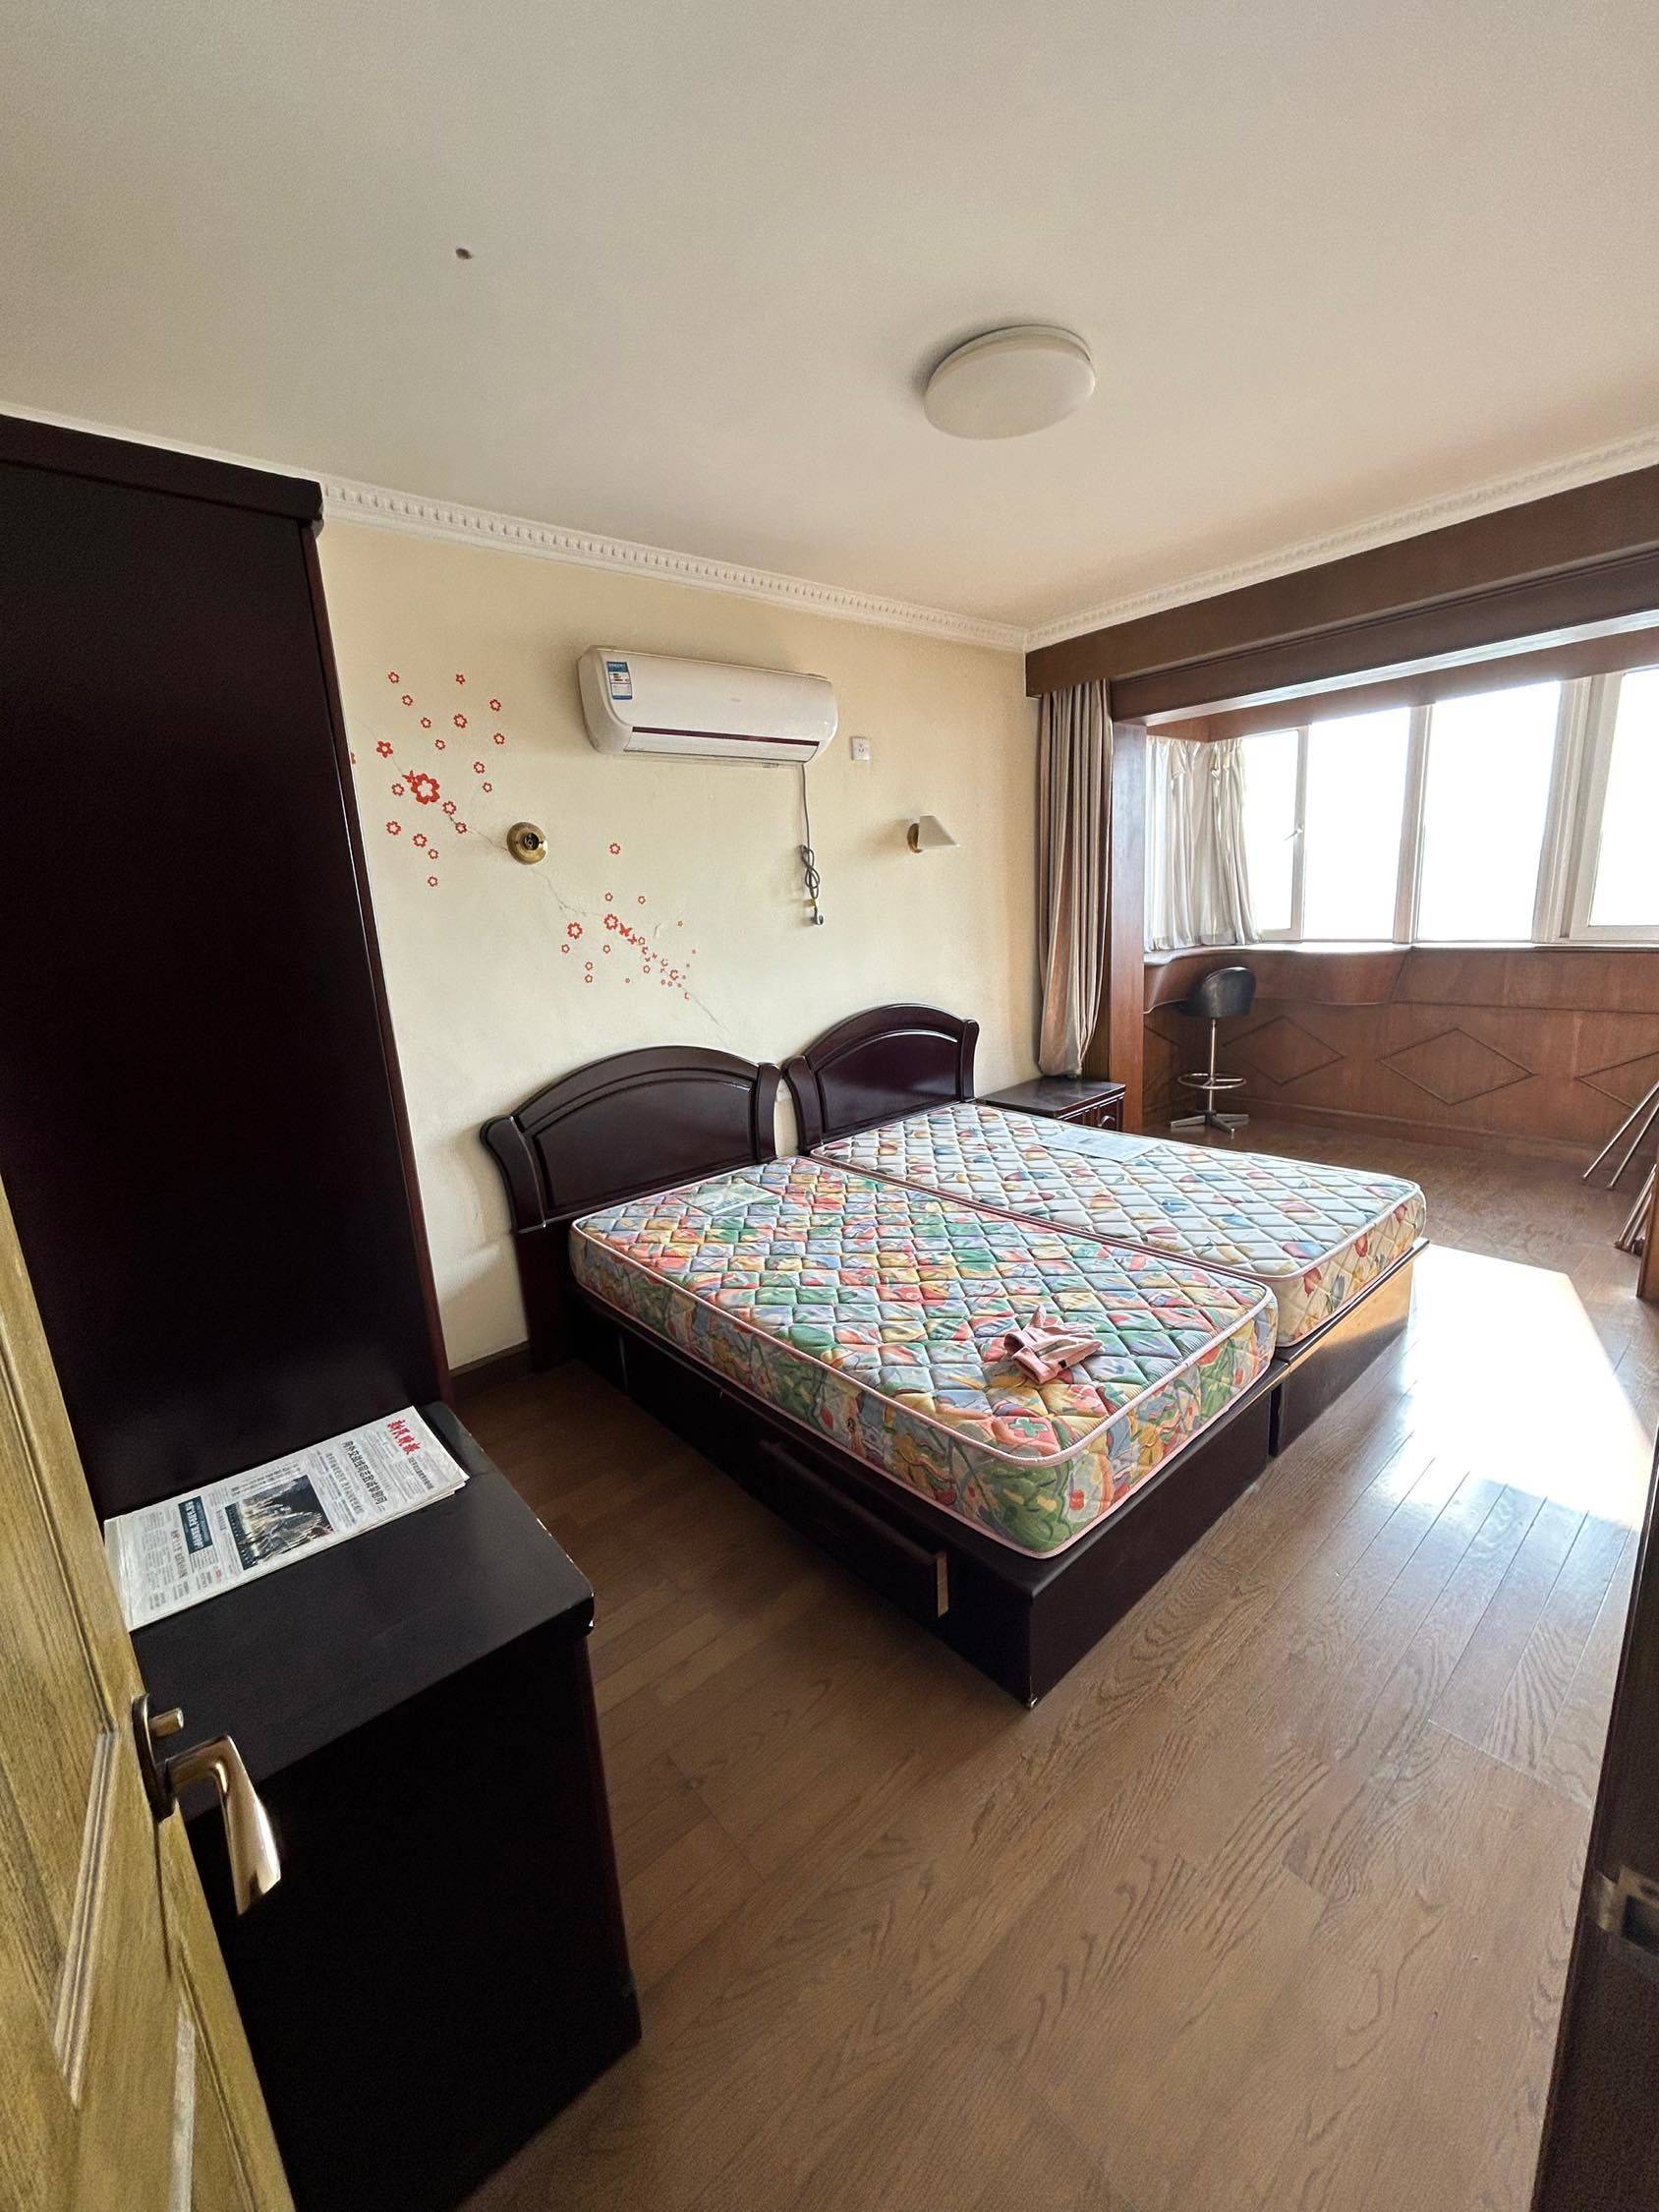 Shanghai-Putuo-Cozy Home,Clean&Comfy,No Gender Limit,Hustle & Bustle,“Friends”,Chilled,LGBTQ Friendly